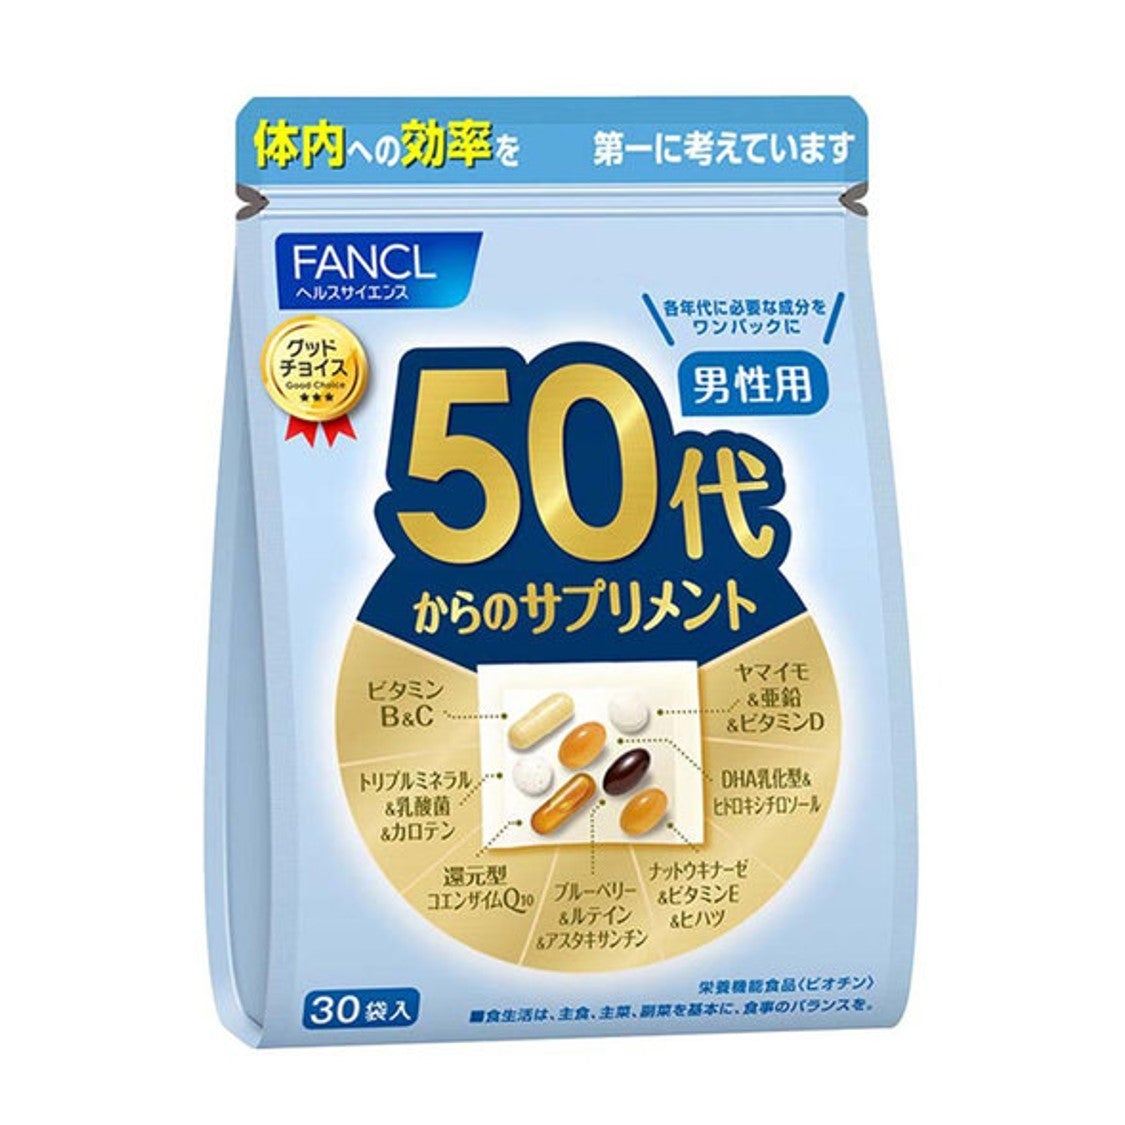 fancl-multivitamins-for-men-50-30bags-newpackage